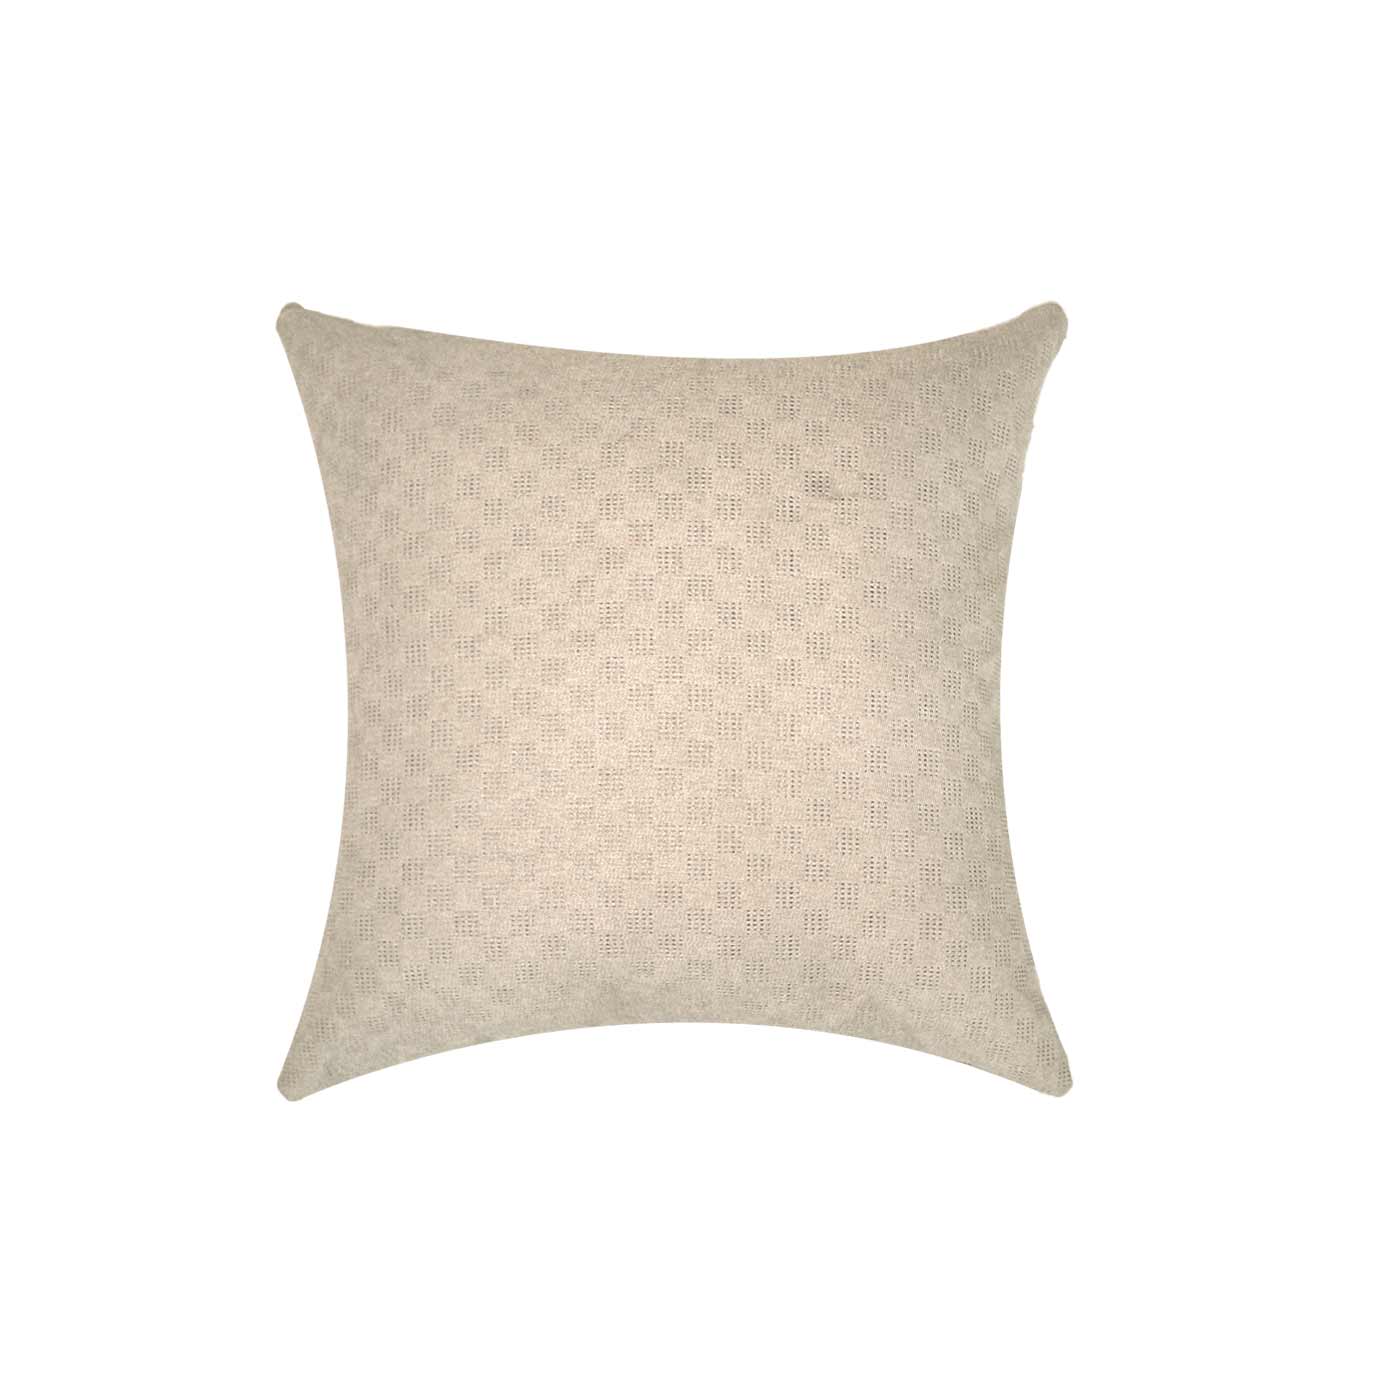 Muko Perforated Square Ivory Cushion